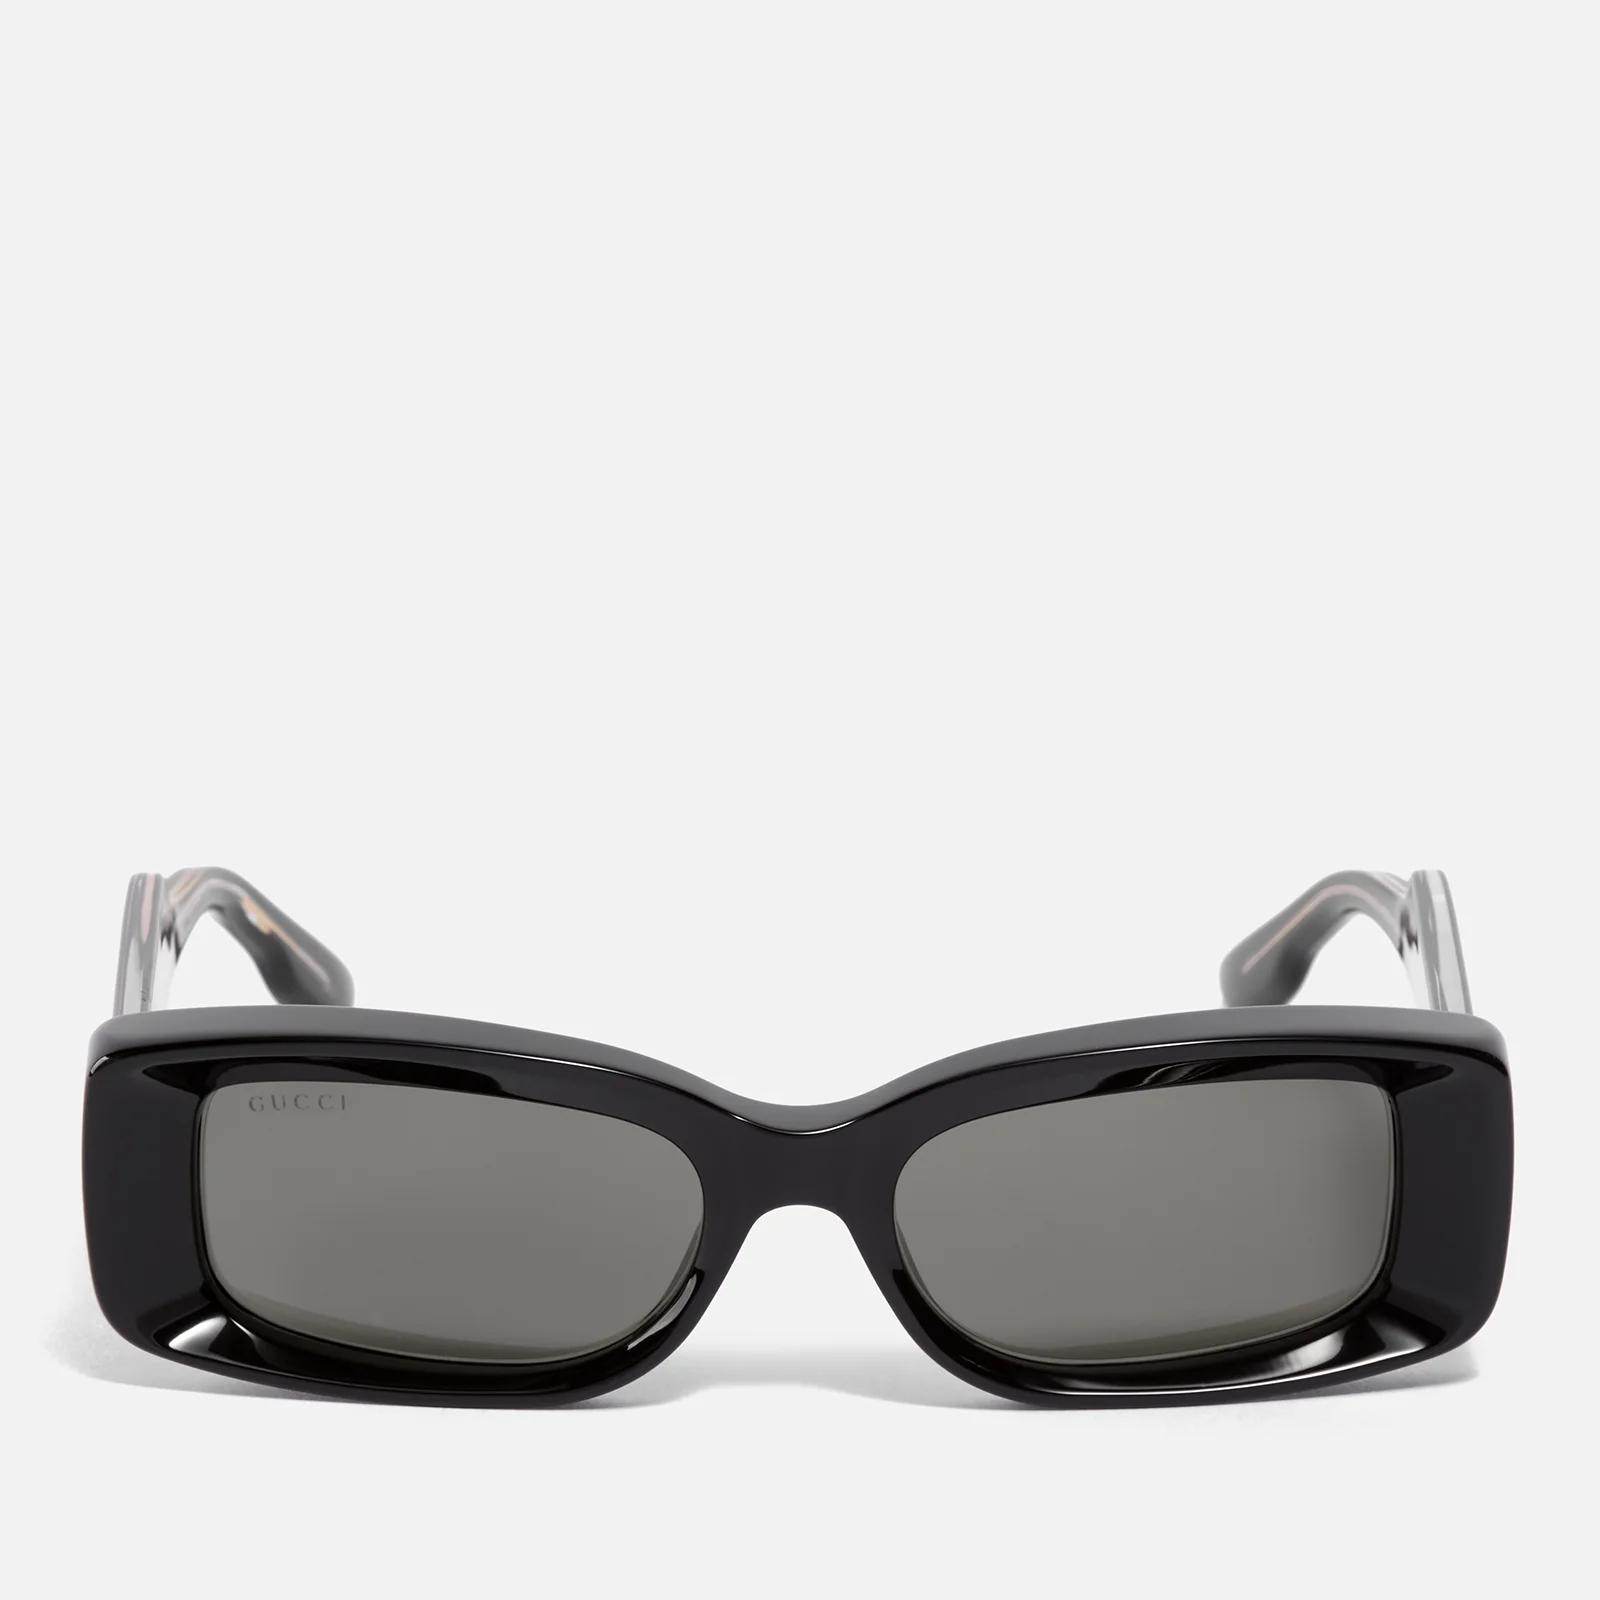 Gucci Acetate Rectangular-Frame Sunglasses Image 1